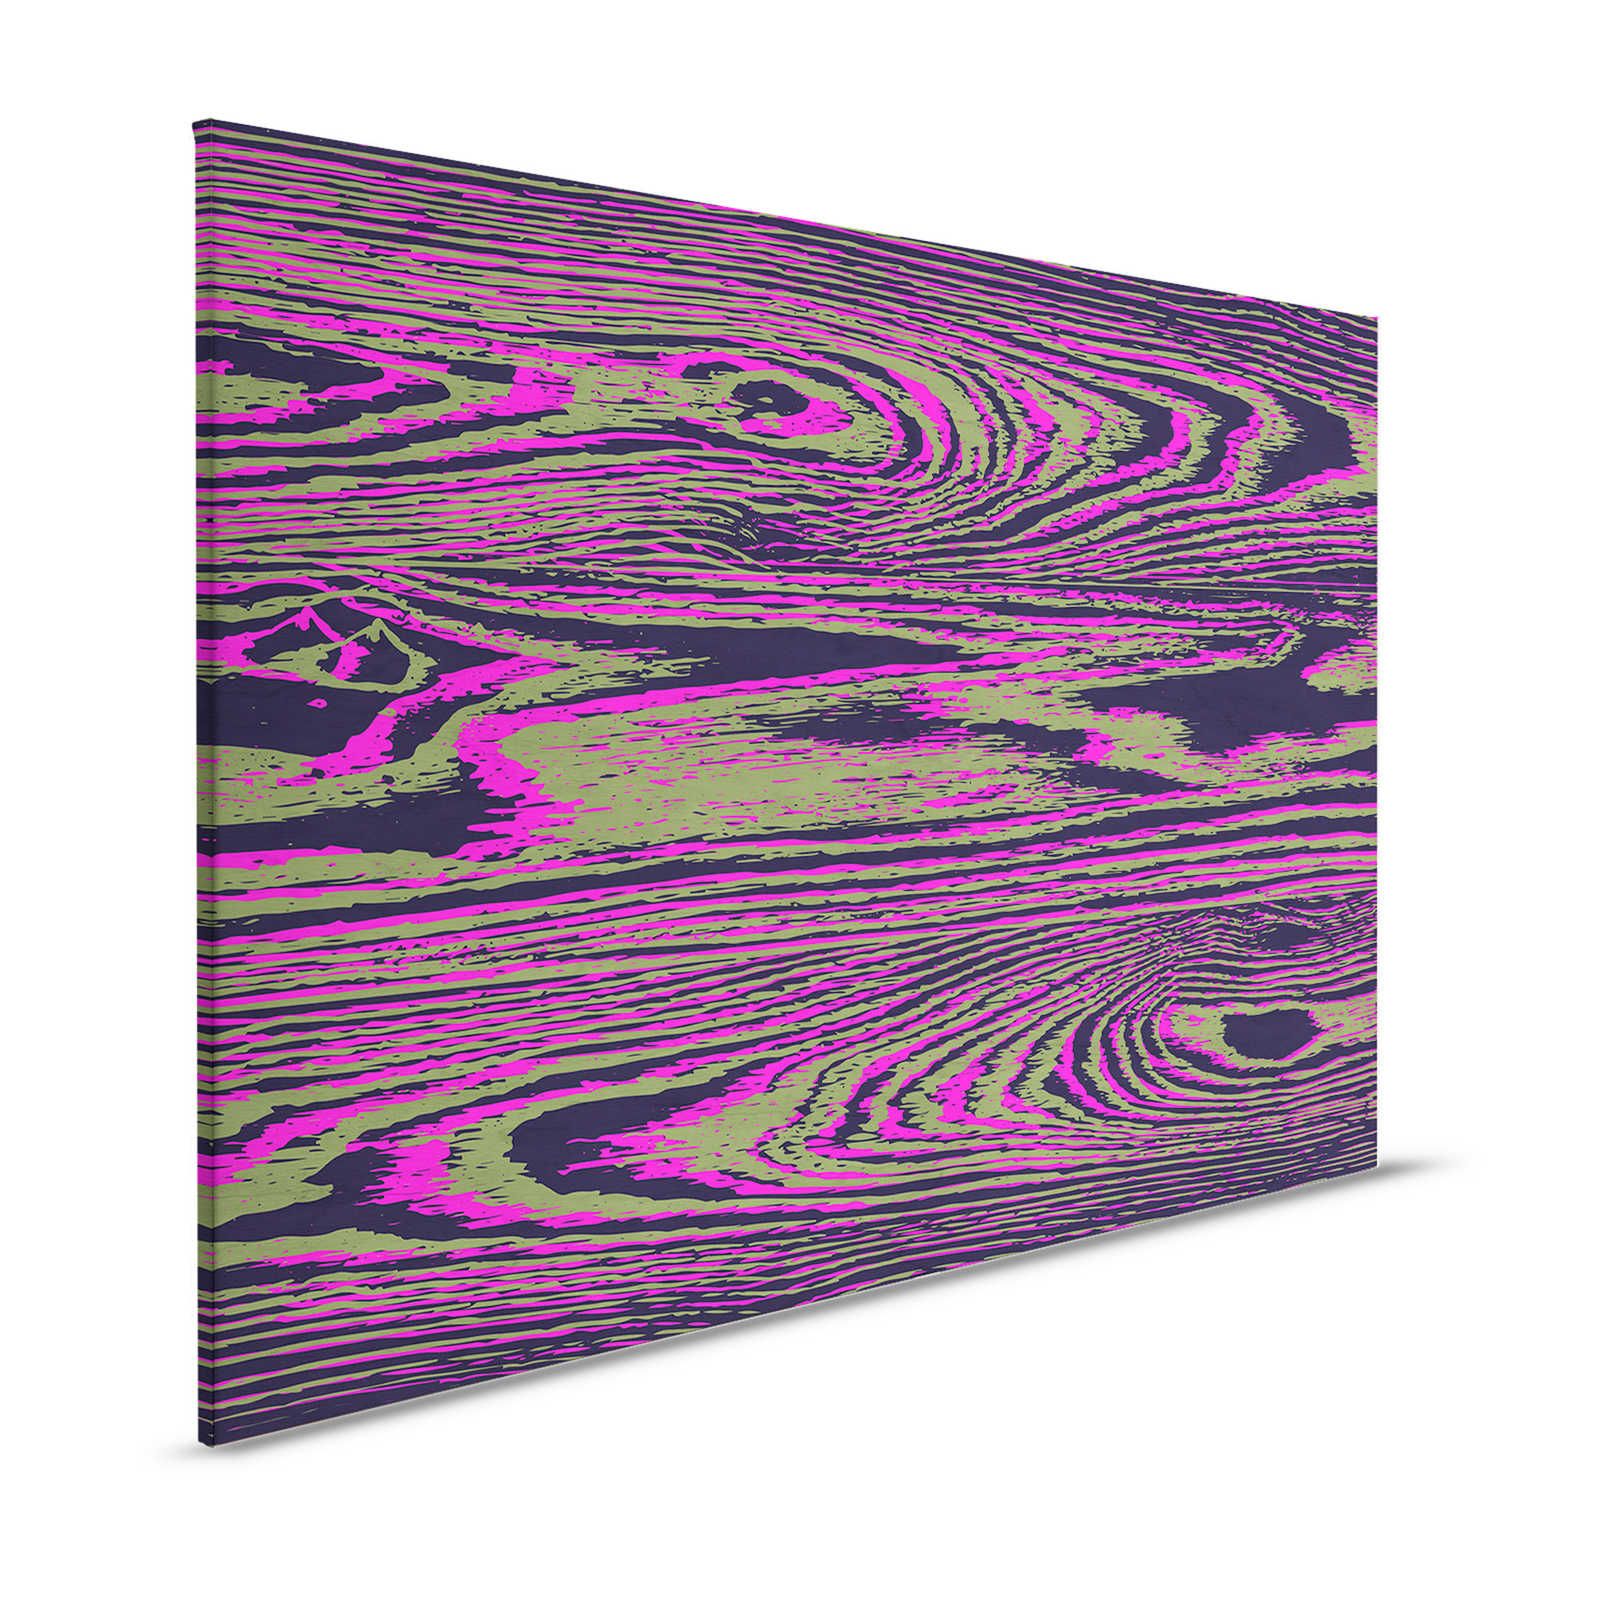 Kontiki 2 - Quadro su tela Neon Wood Grain, Rosa e Nero - 1,20 m x 0,80 m
